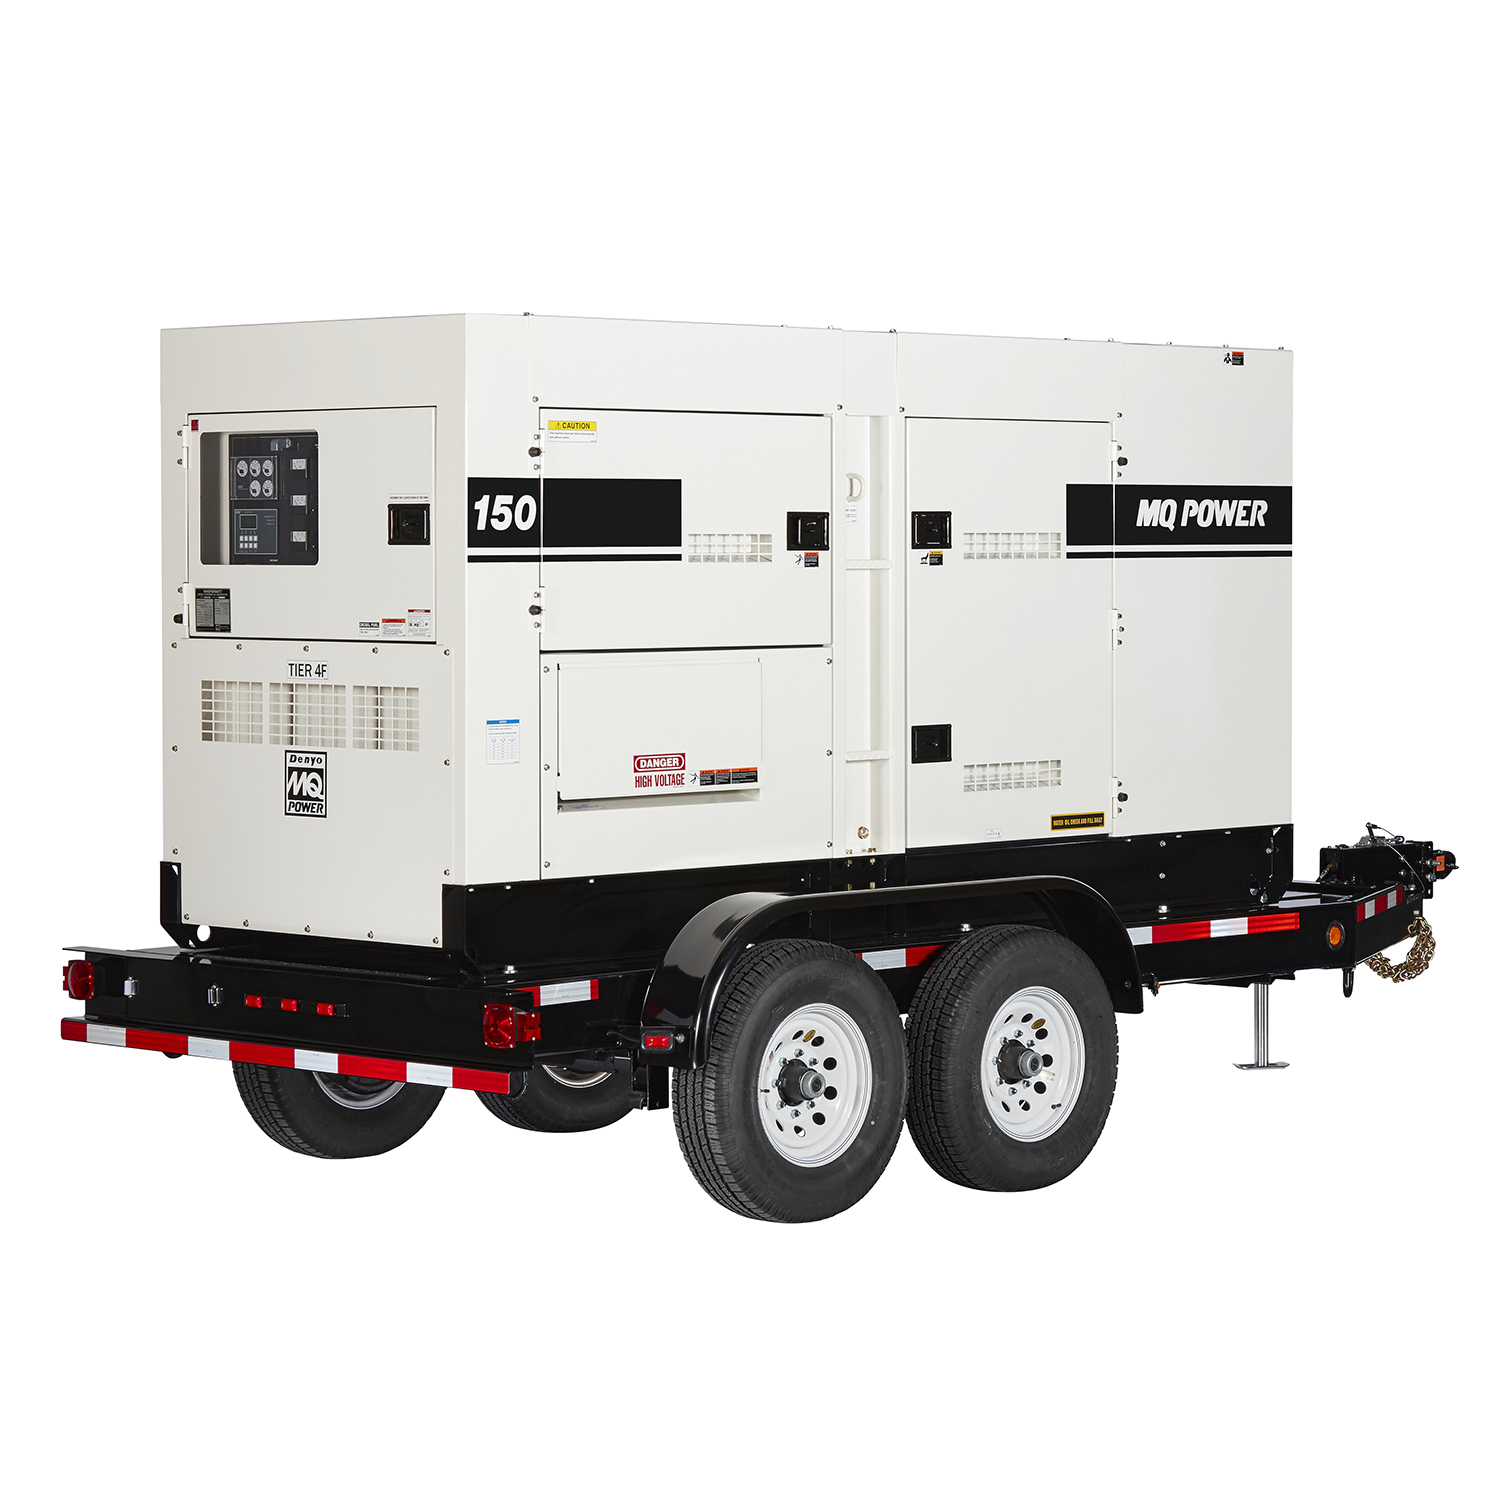 120kw Diesel Generator | Chicago Portable Power Generator Rental